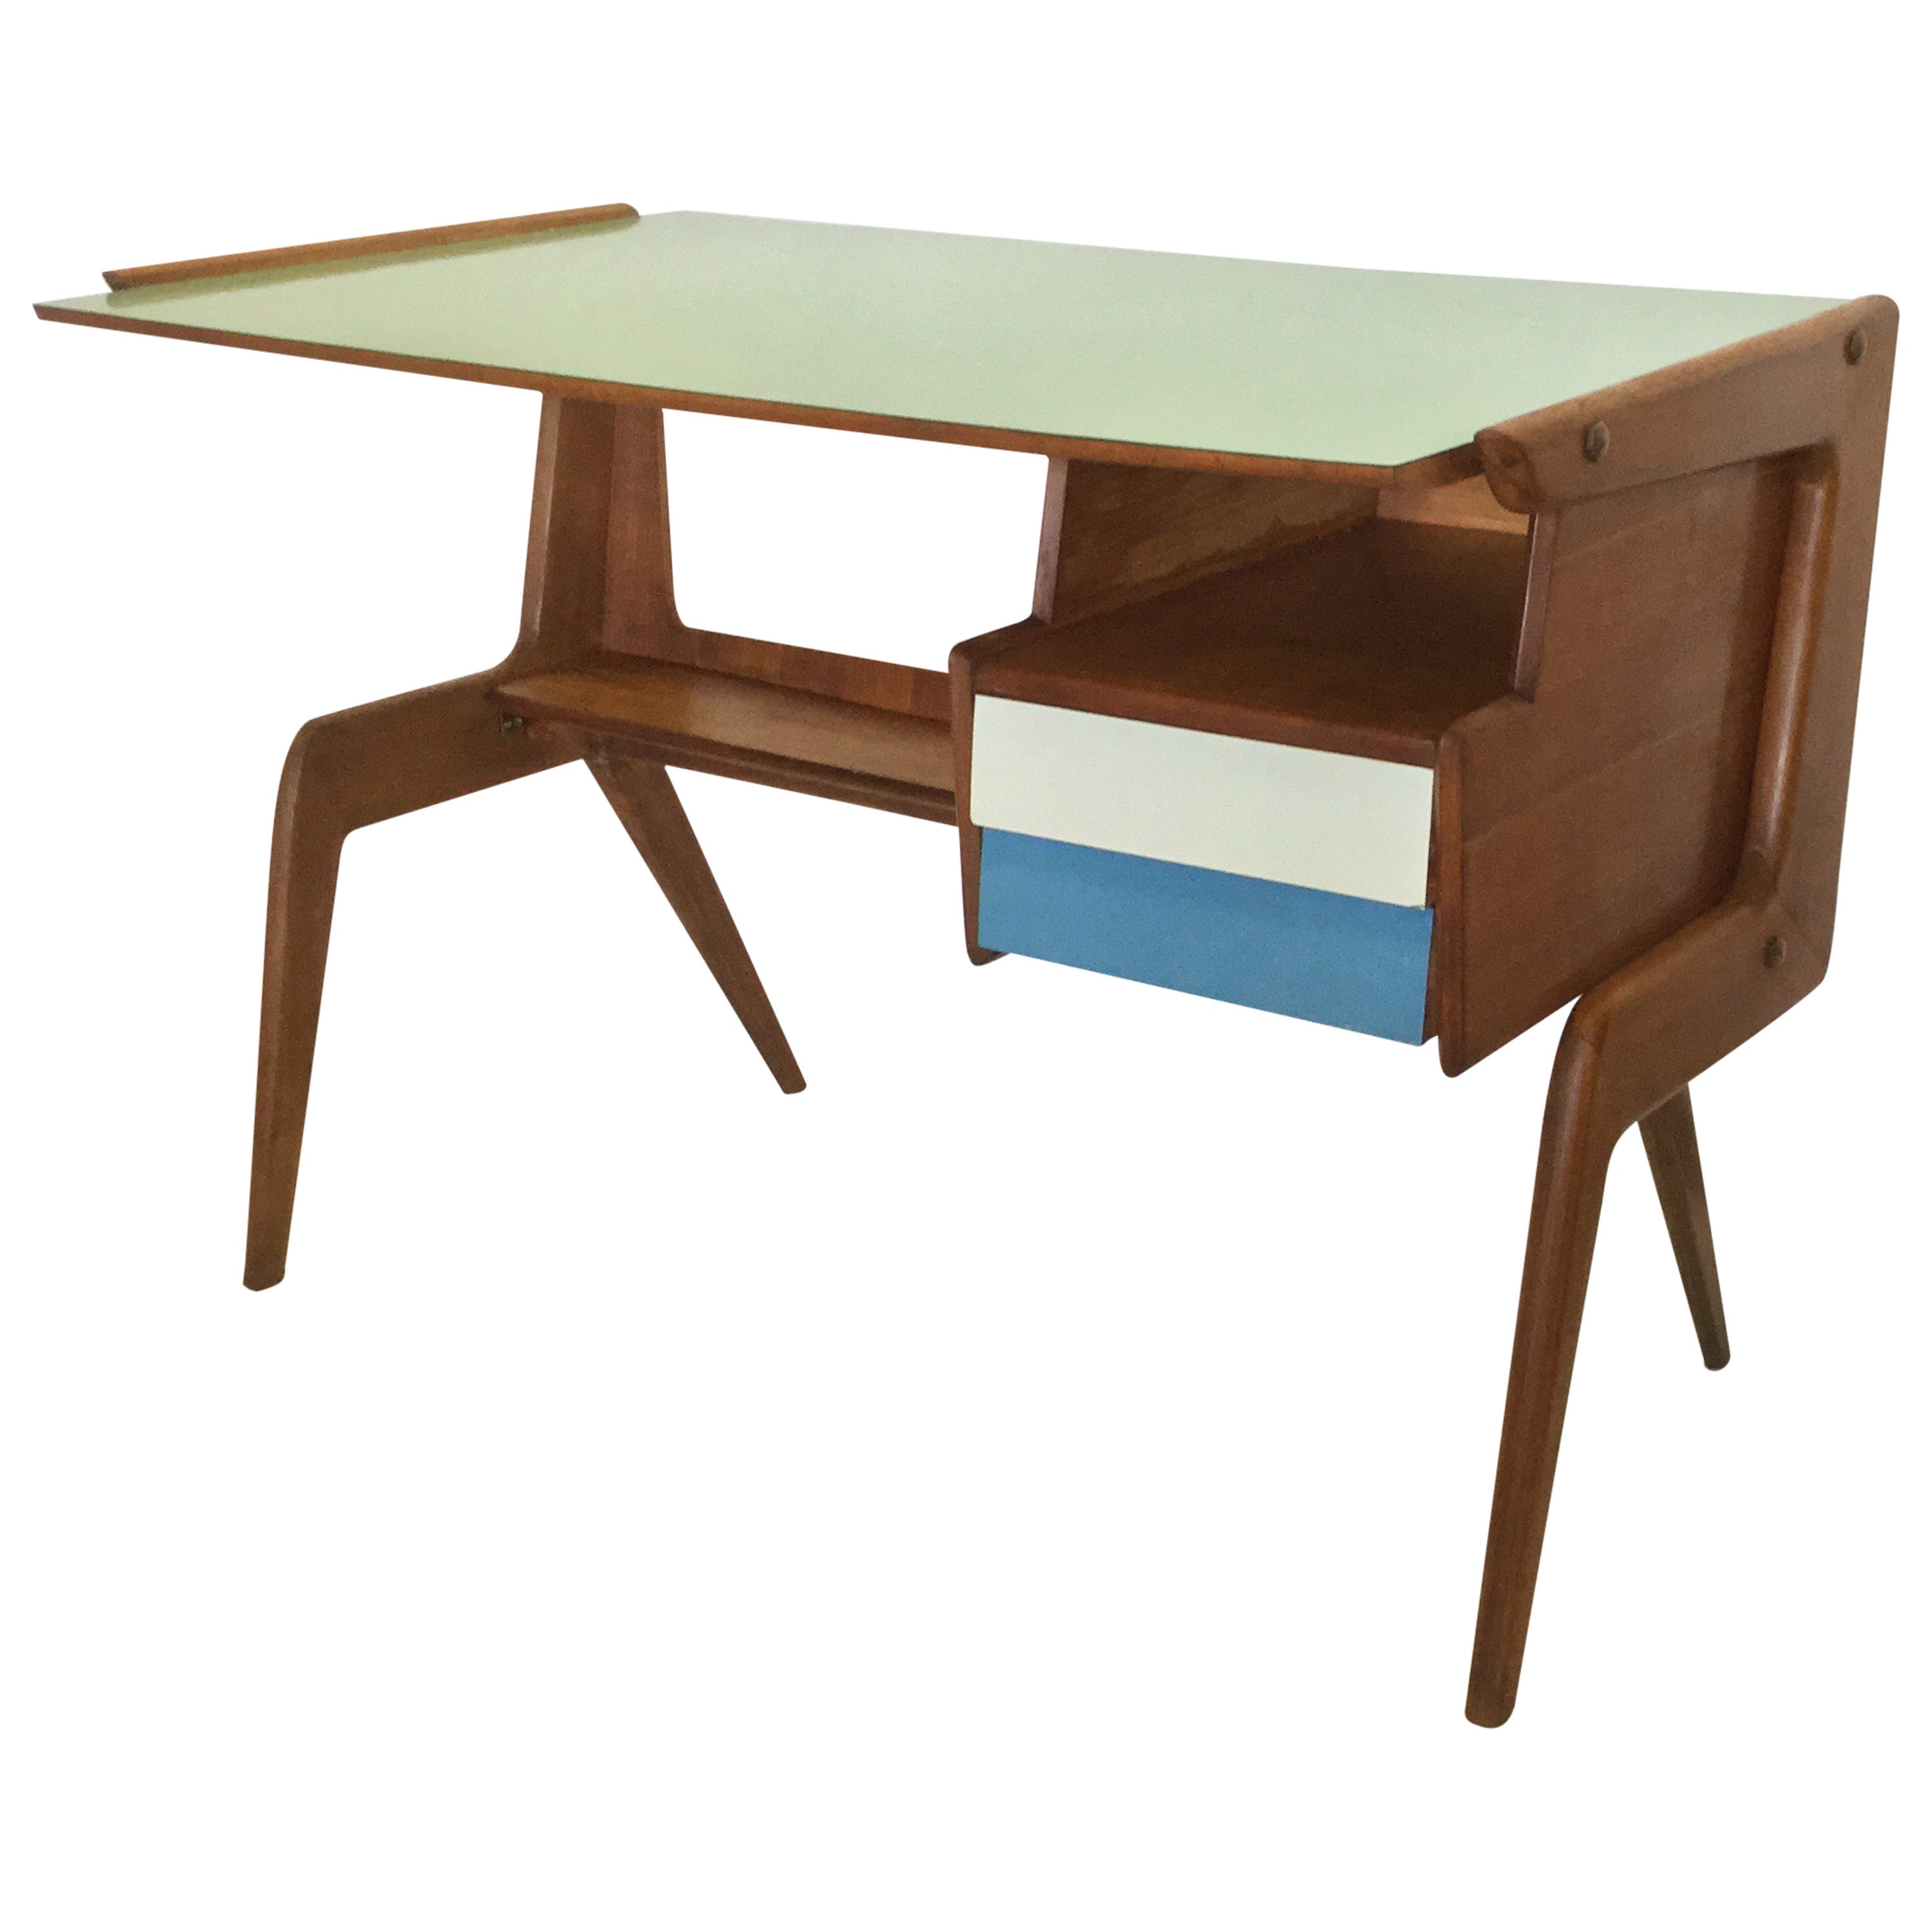 Exceptional desk attr. GIO PONTI 1950